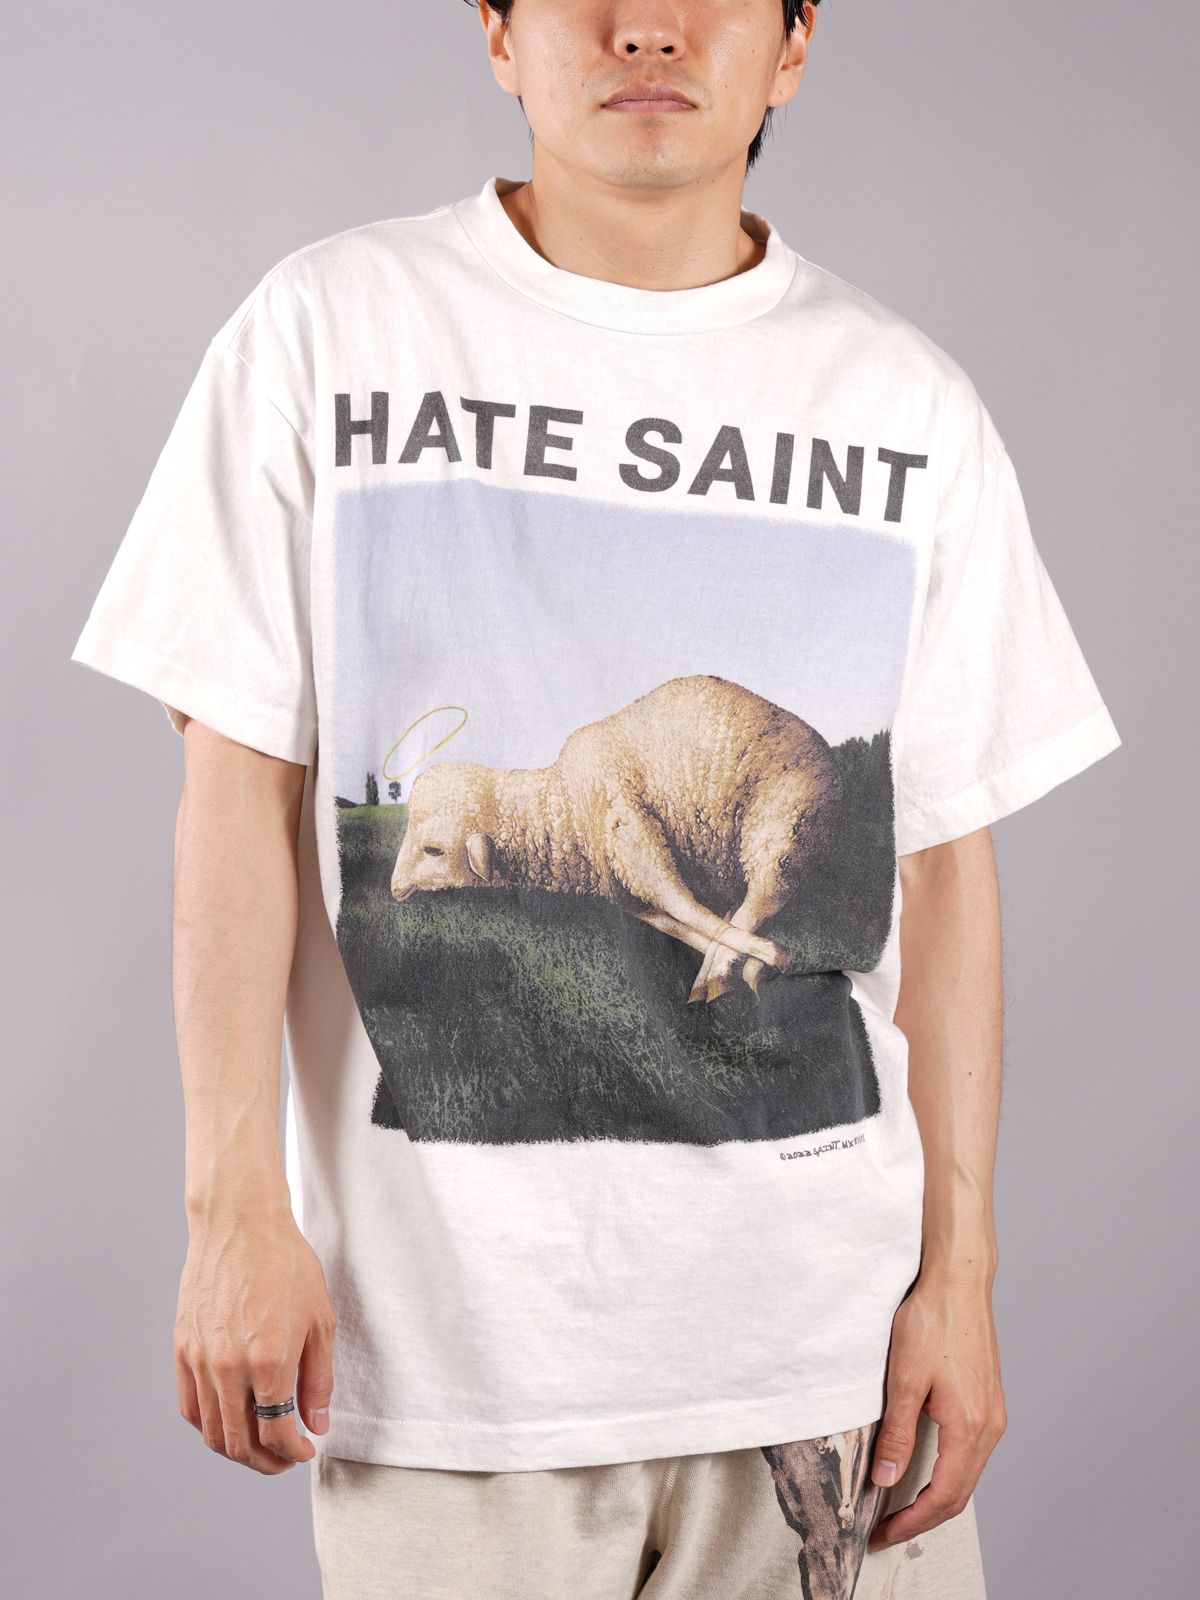 SAINT Mxxxxxx セント マイケル 22SS HATE SHEEP フロントフォトプリント 半袖Tシャツ ホワイト SM-S22-0000-008